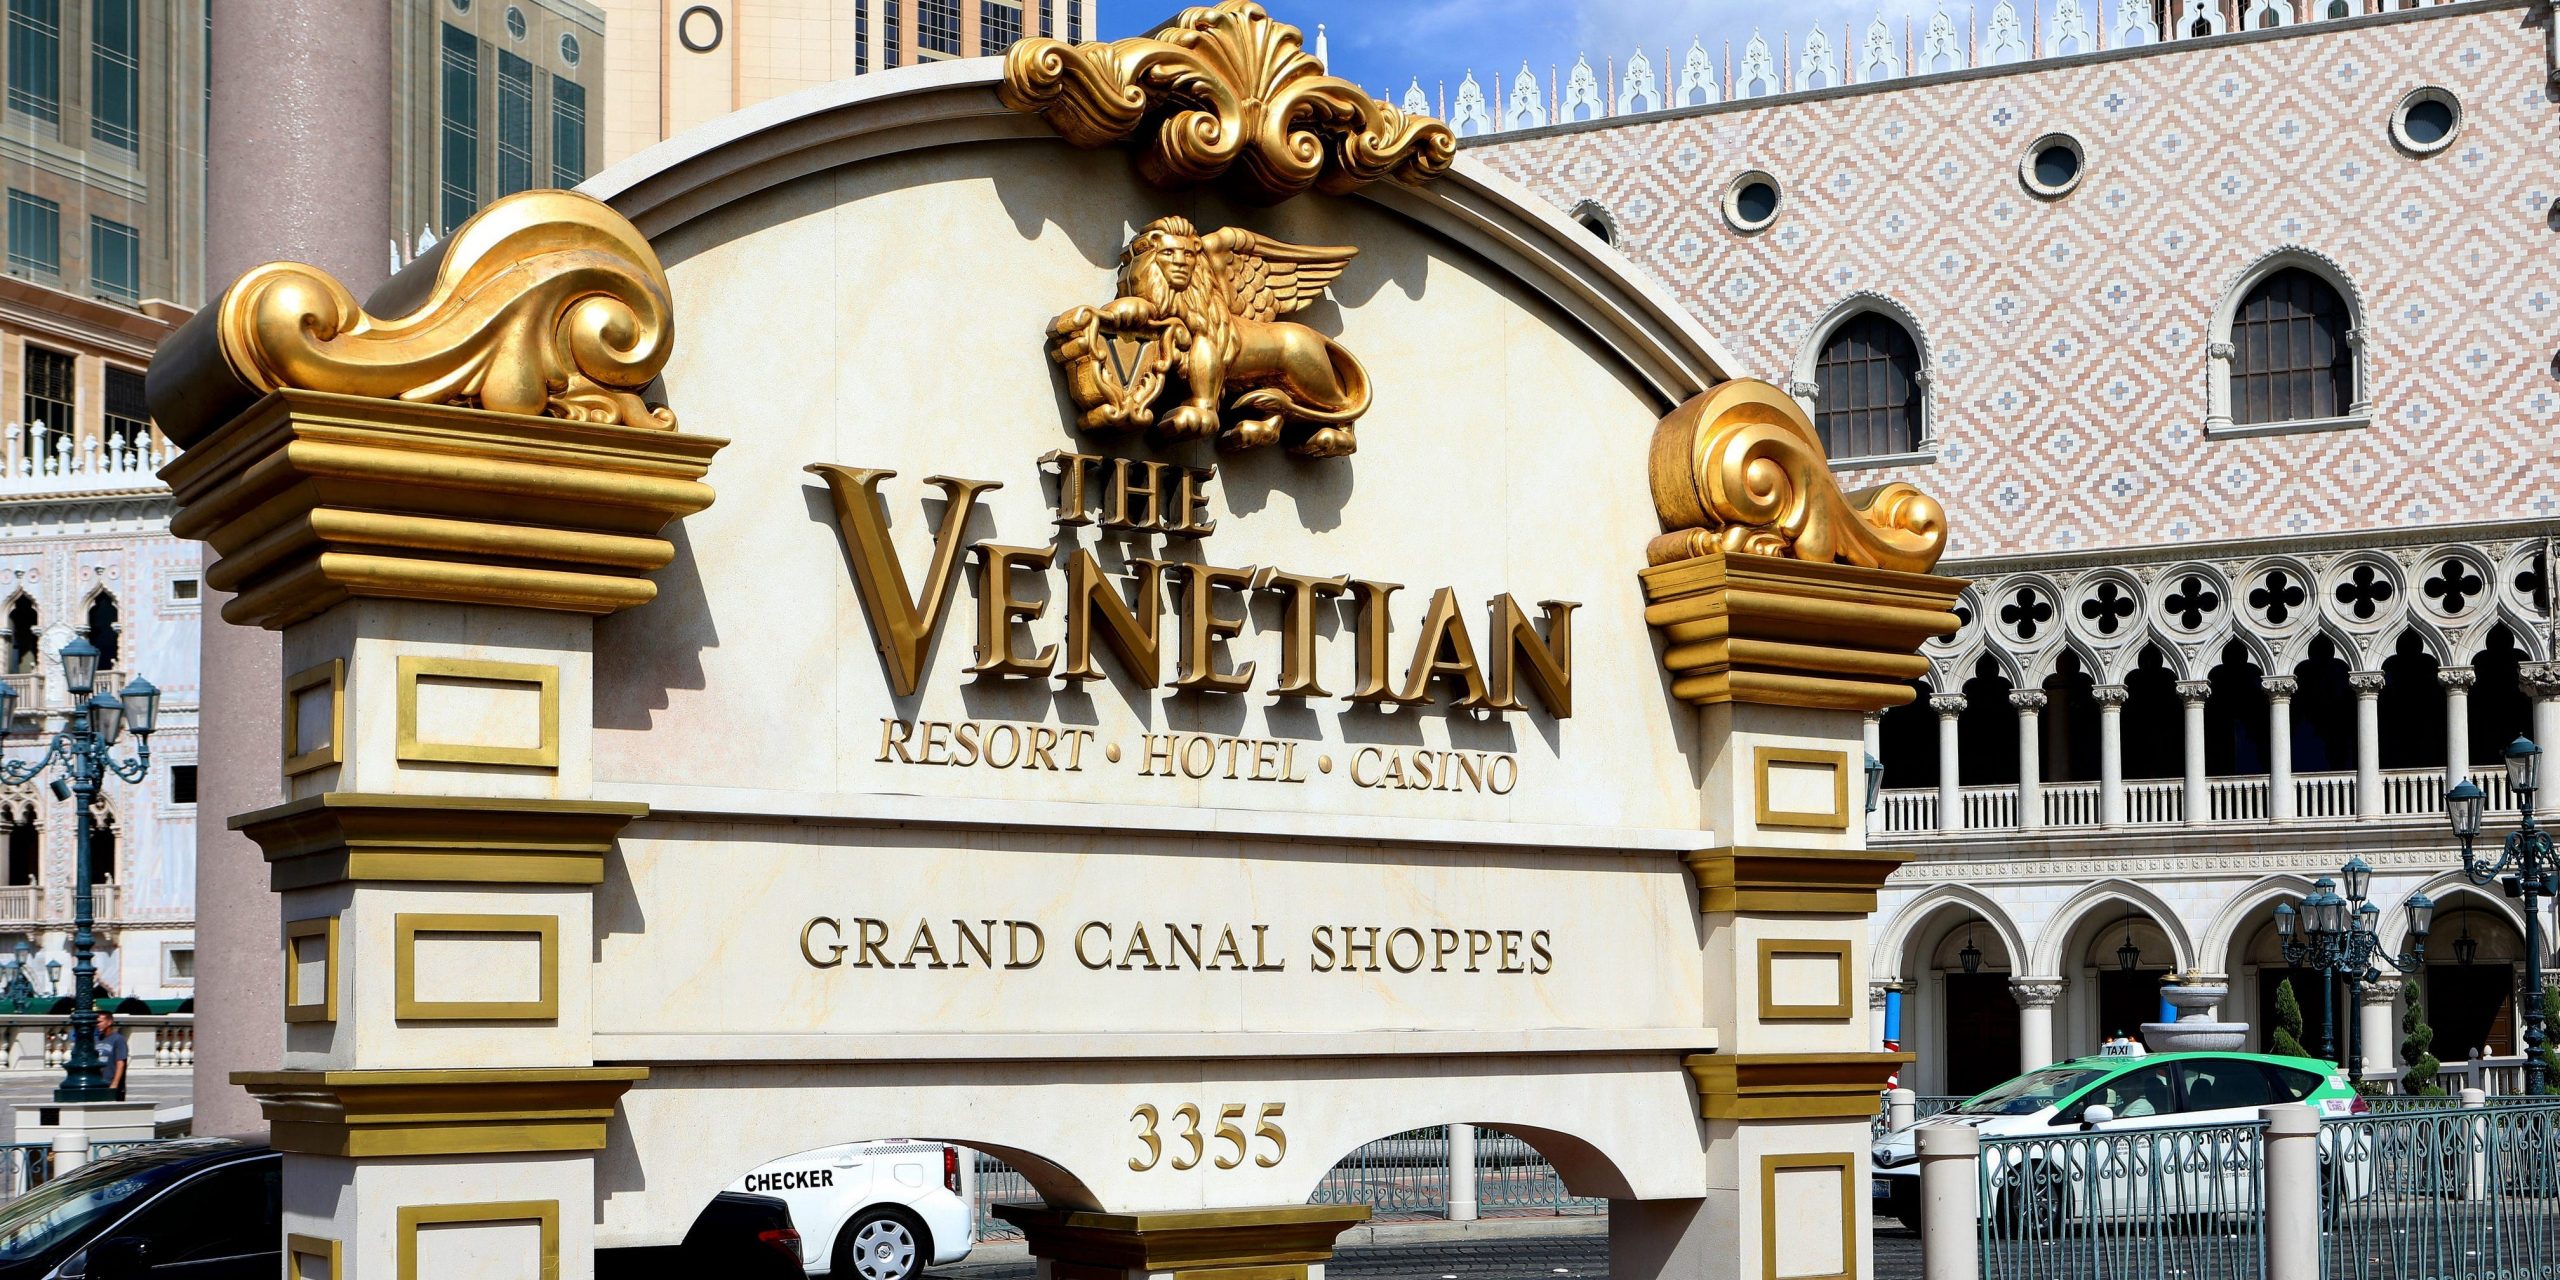 The Venetian Resort Hotel and Casino signage in Las Vegas, Nevada on September 9, 2017.